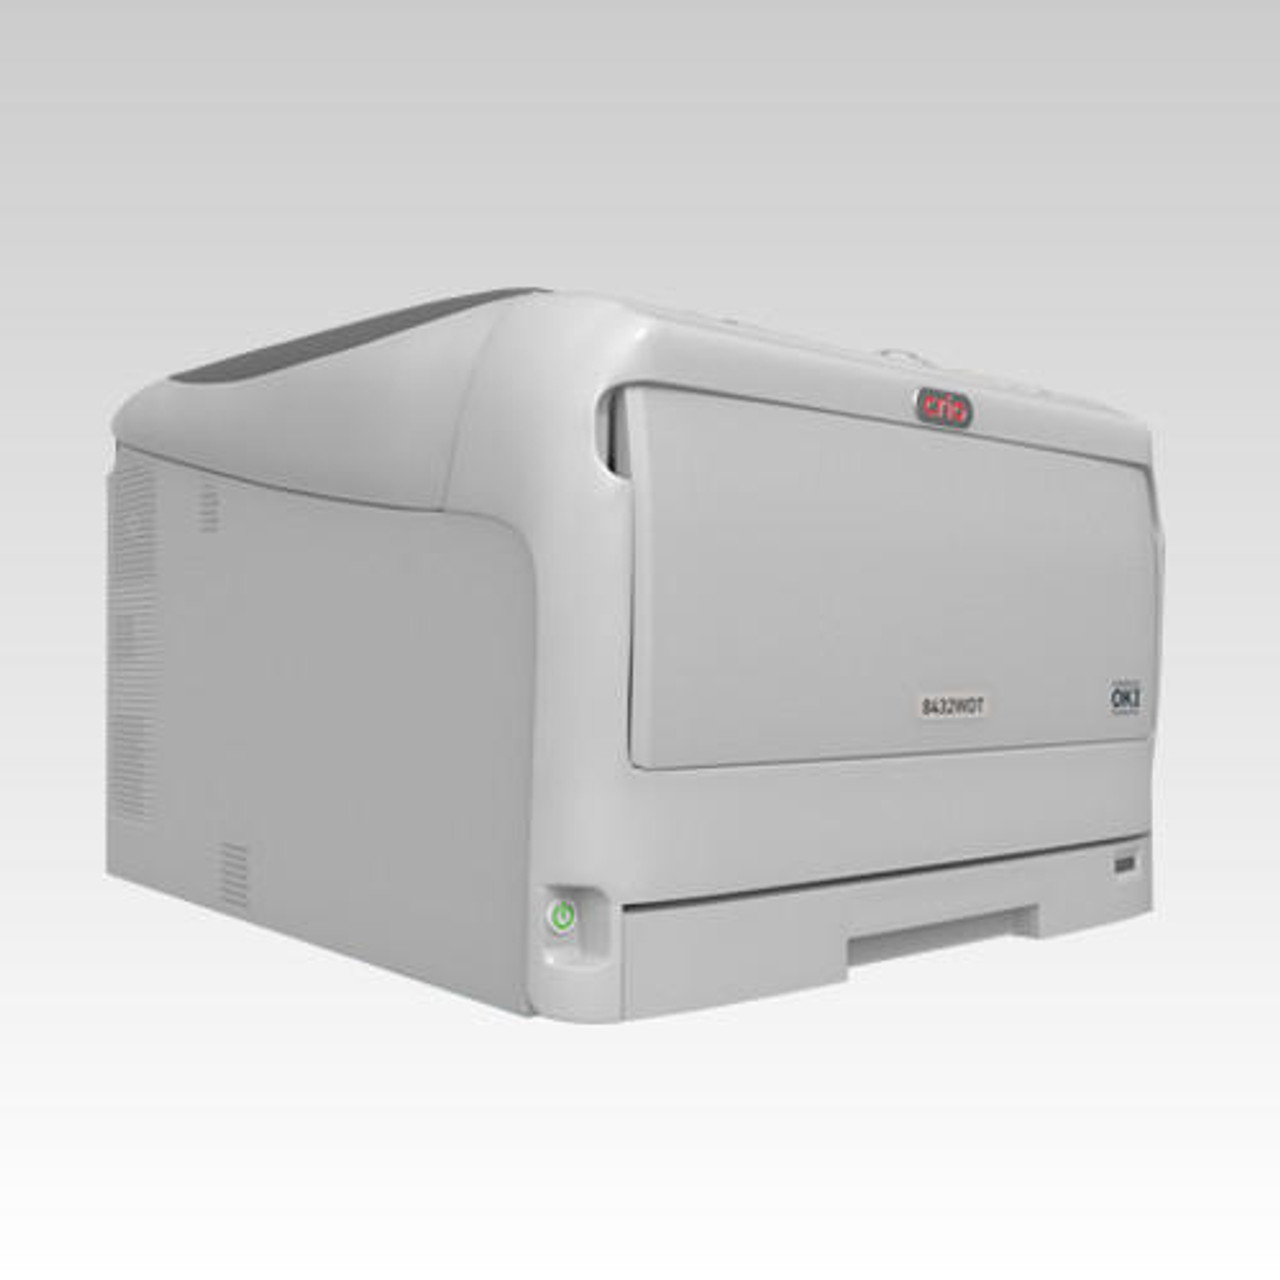 Crio 8432WDT White Toner Printer Bundle